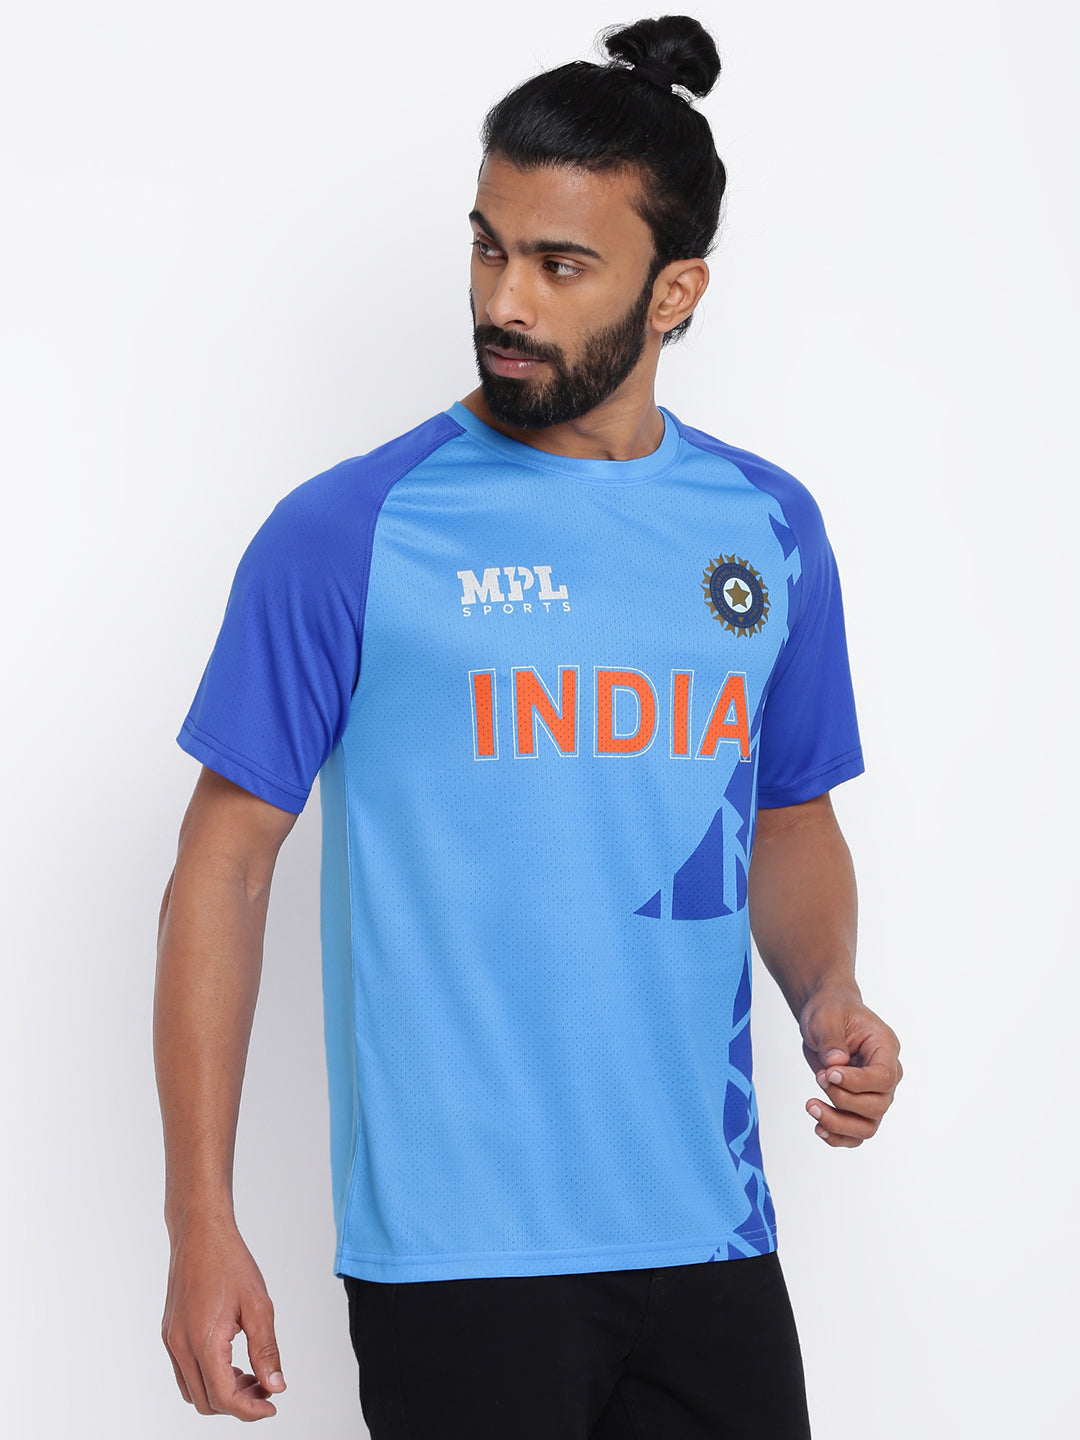 Team India T20 Stadium Jersey